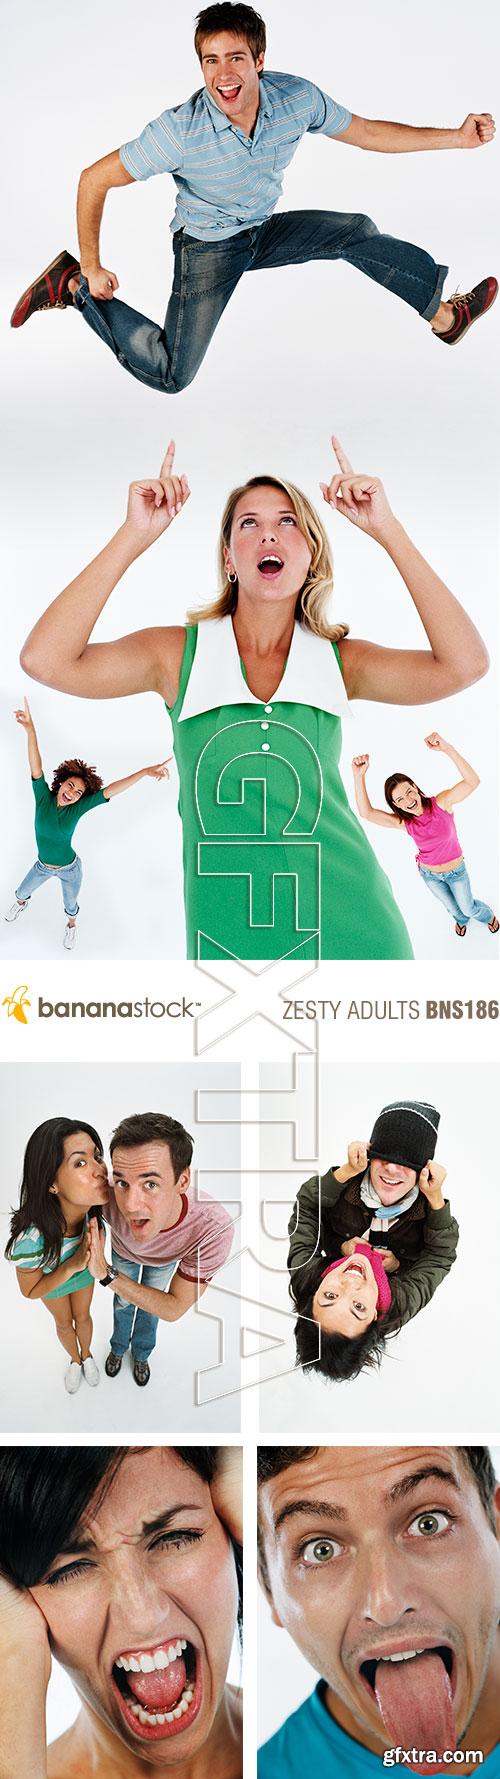 BananaStock BNS186 Zesty Adults